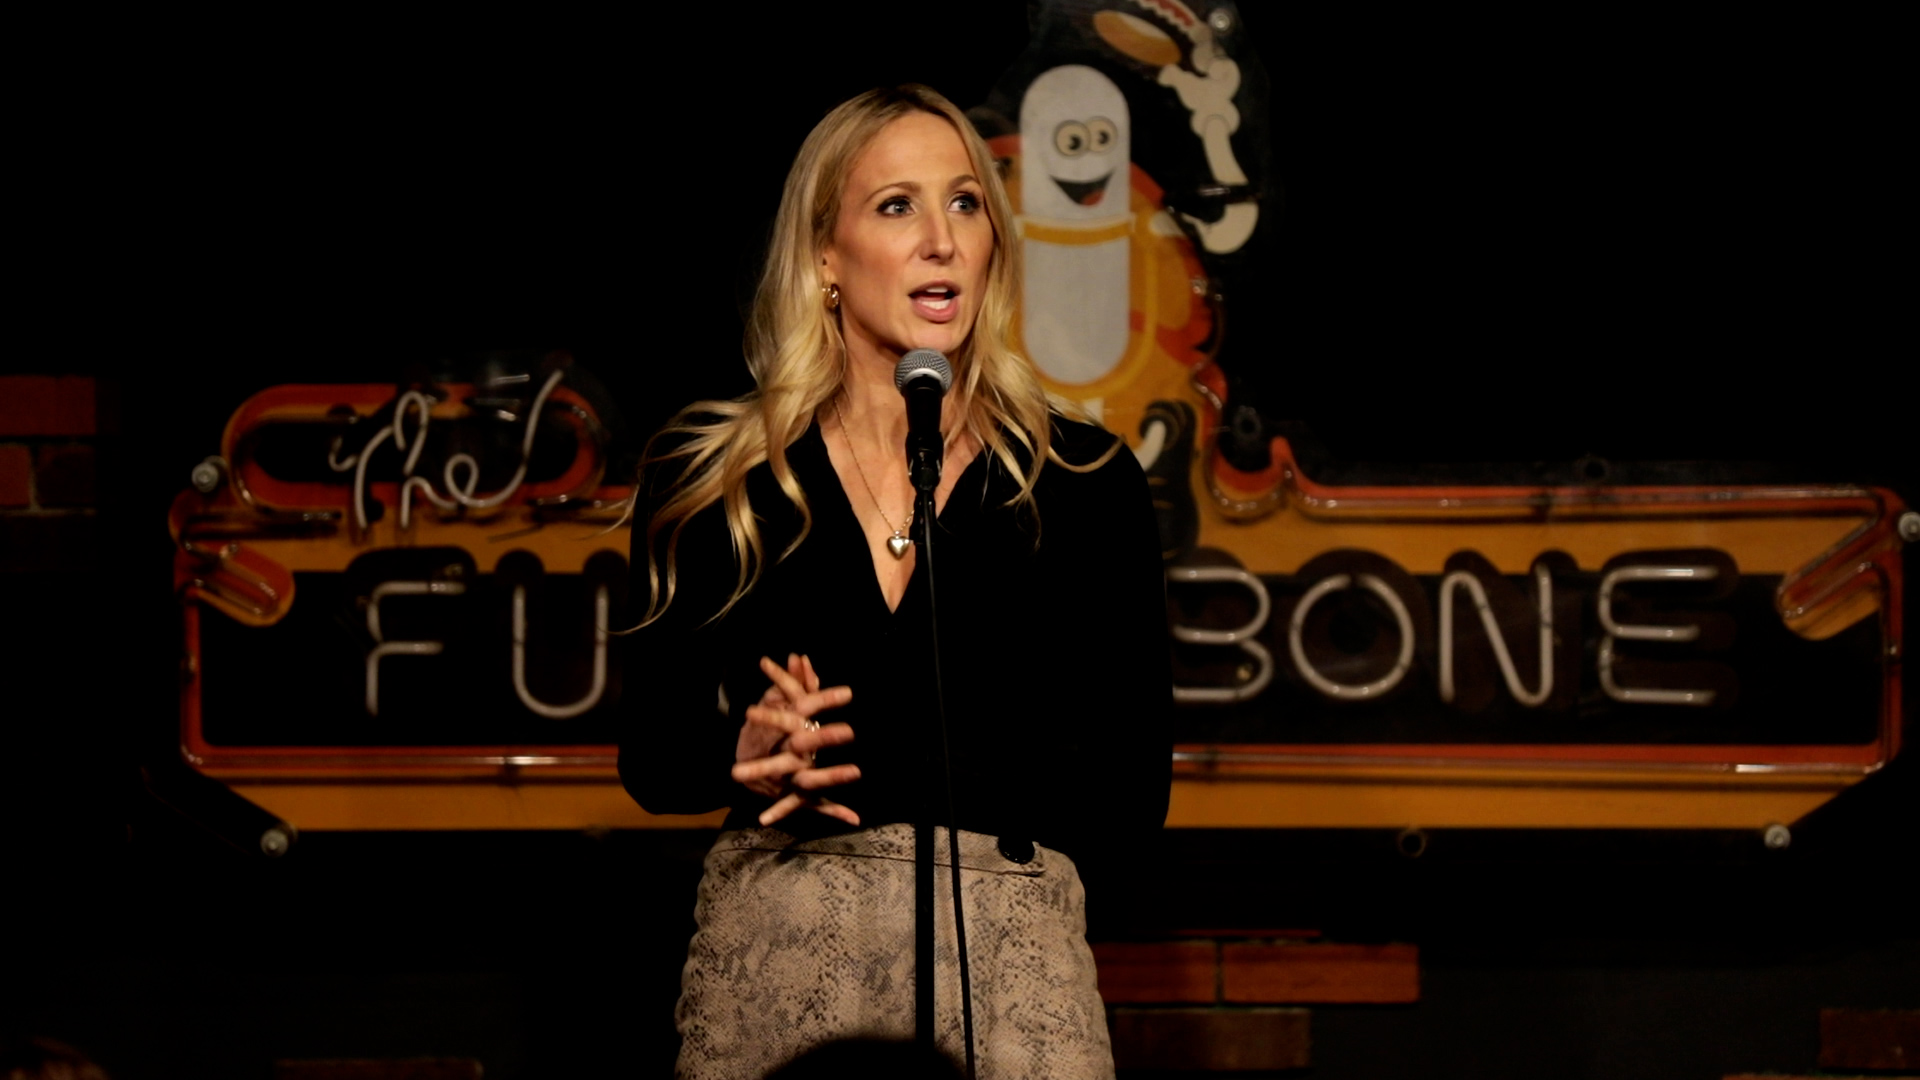 Nikki Glaser's Journey to Comedy Stardom